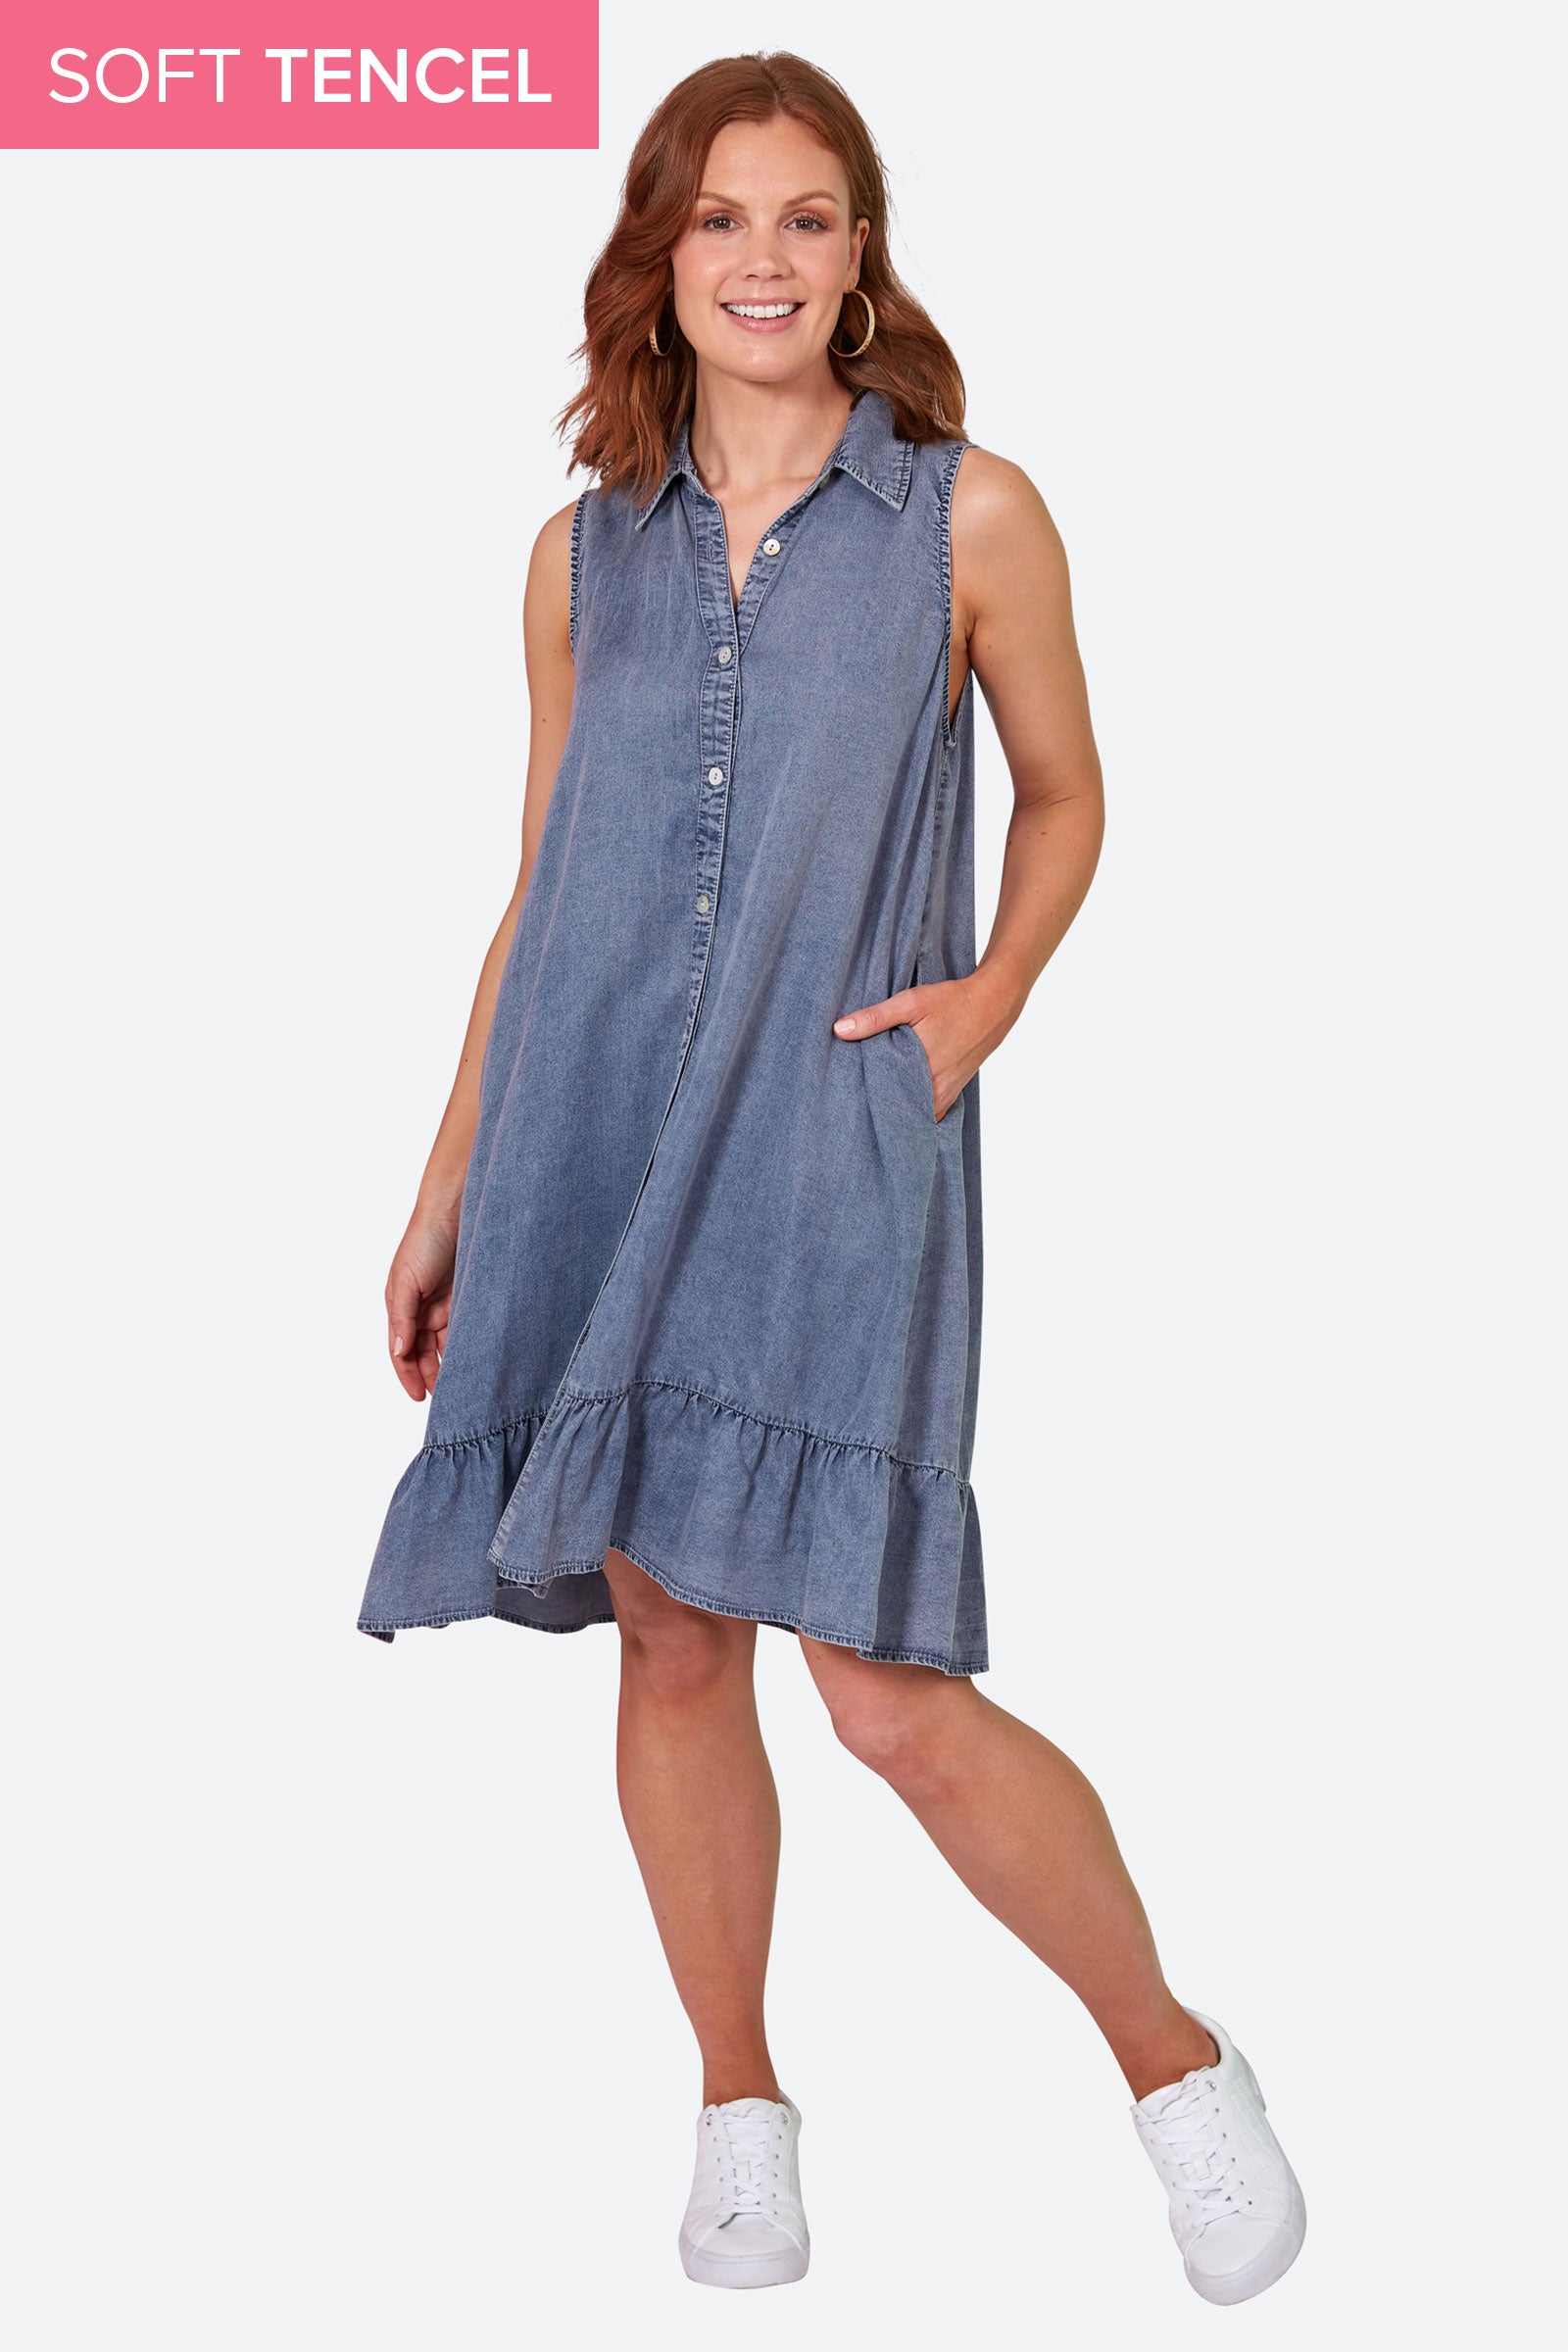 Elan Sleeveless Dress - Denim - eb&ive Clothing - Dress Mid Sleeveless